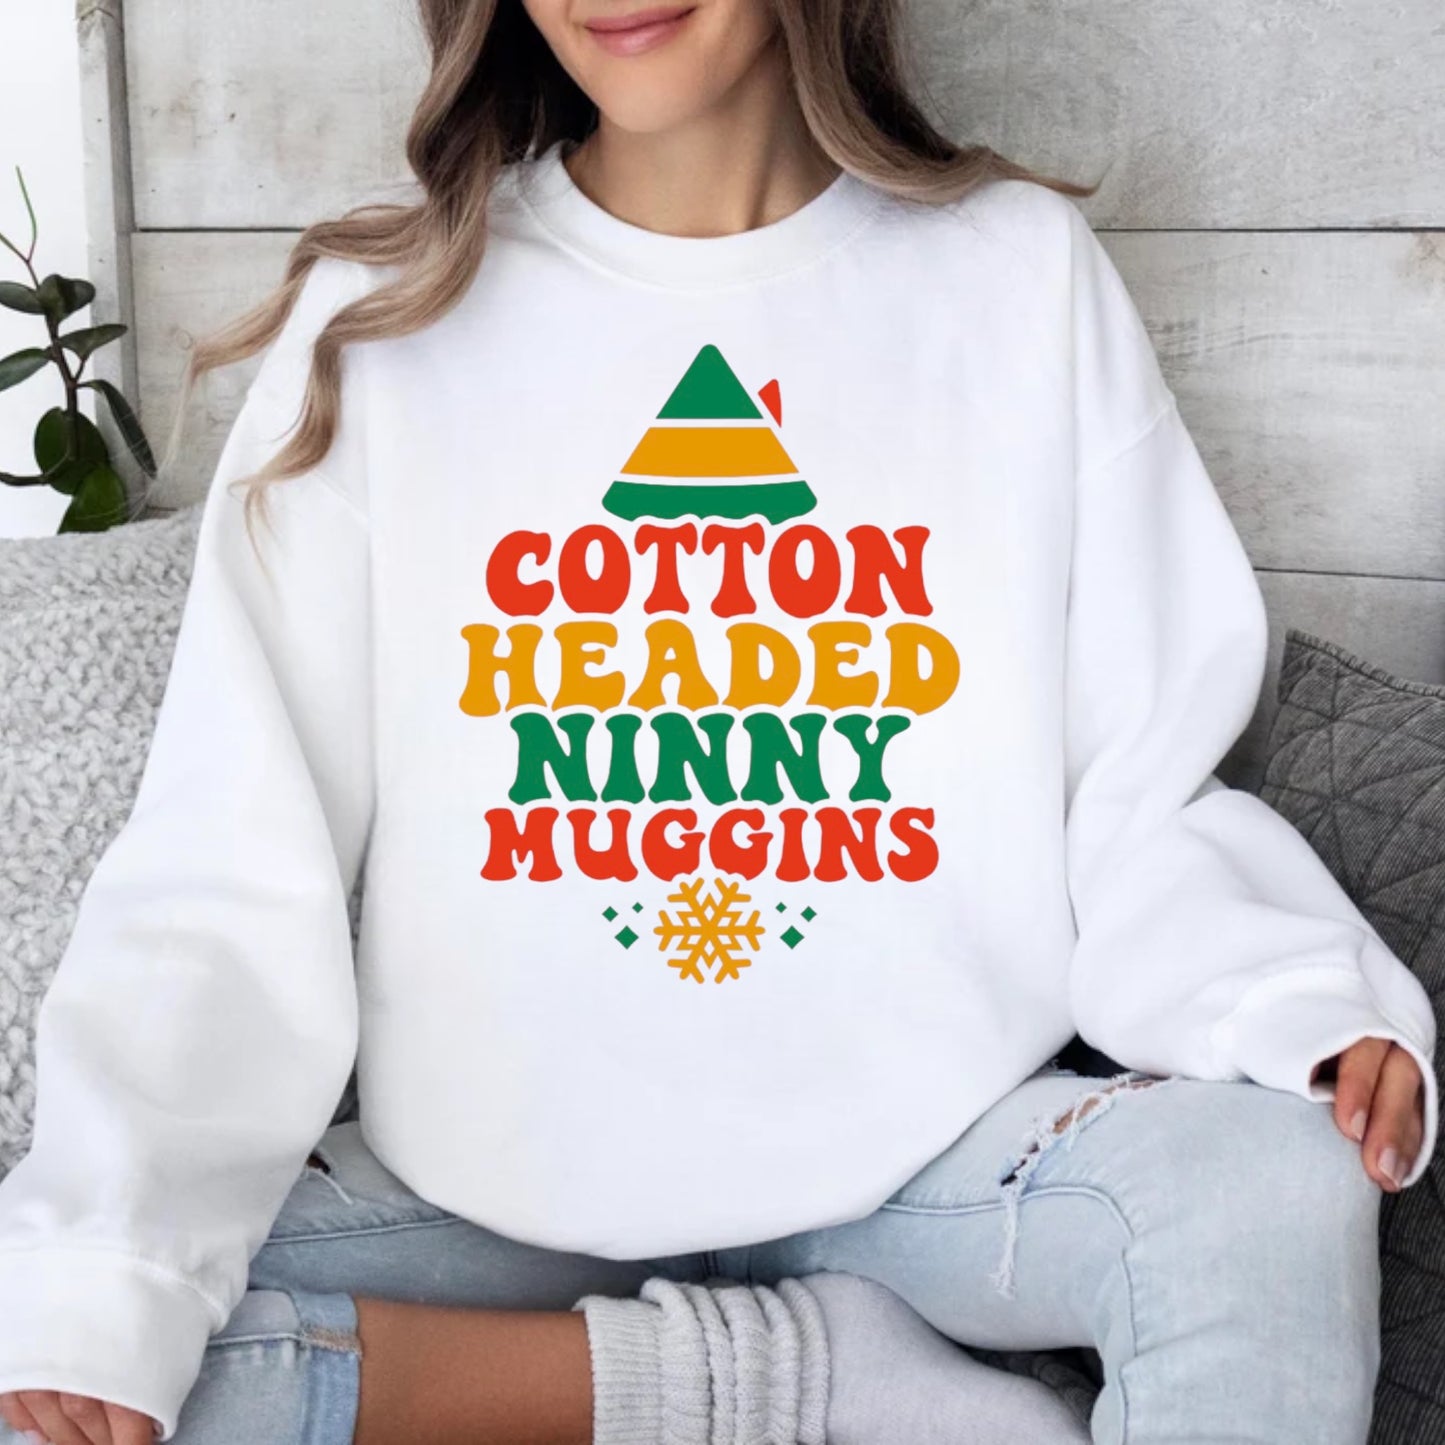 Cotton Headed Ninny Muggins-Tee or Crewneck Sweatshirt